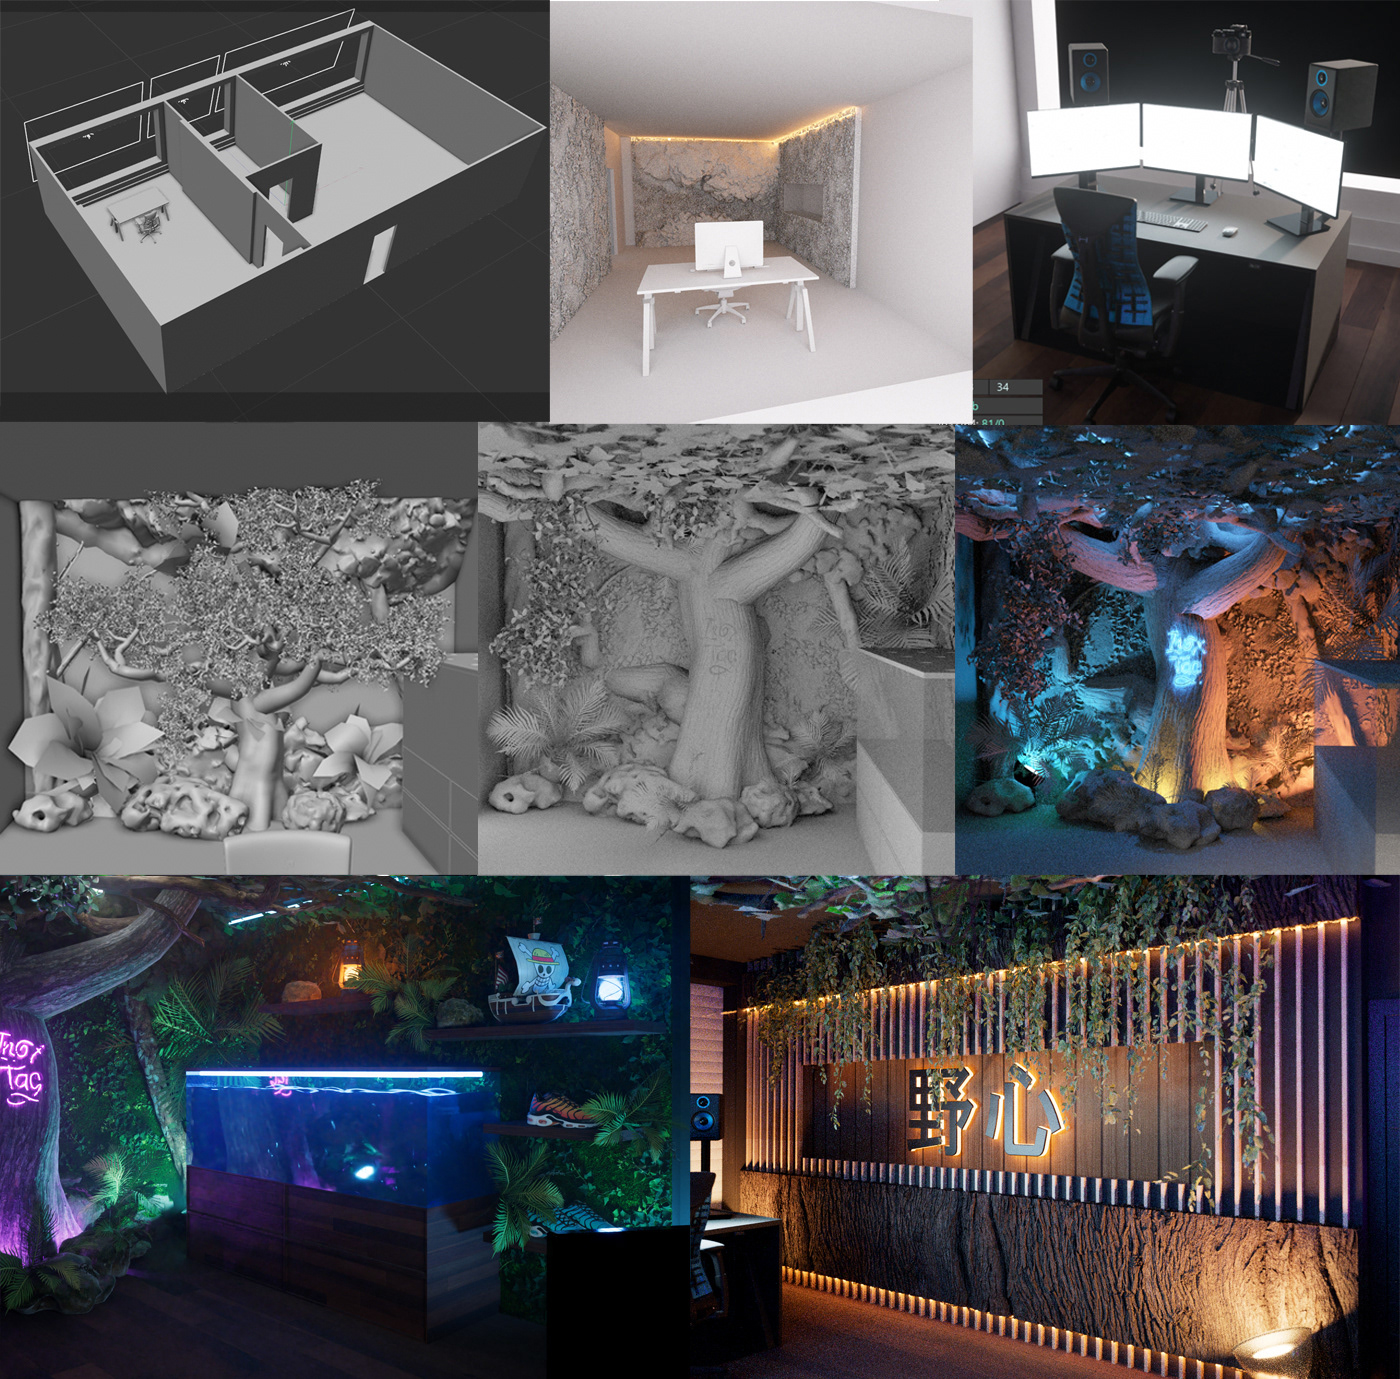 3D Inoxtag design studio stream c4d cinema 4d vegetal forest Streaming